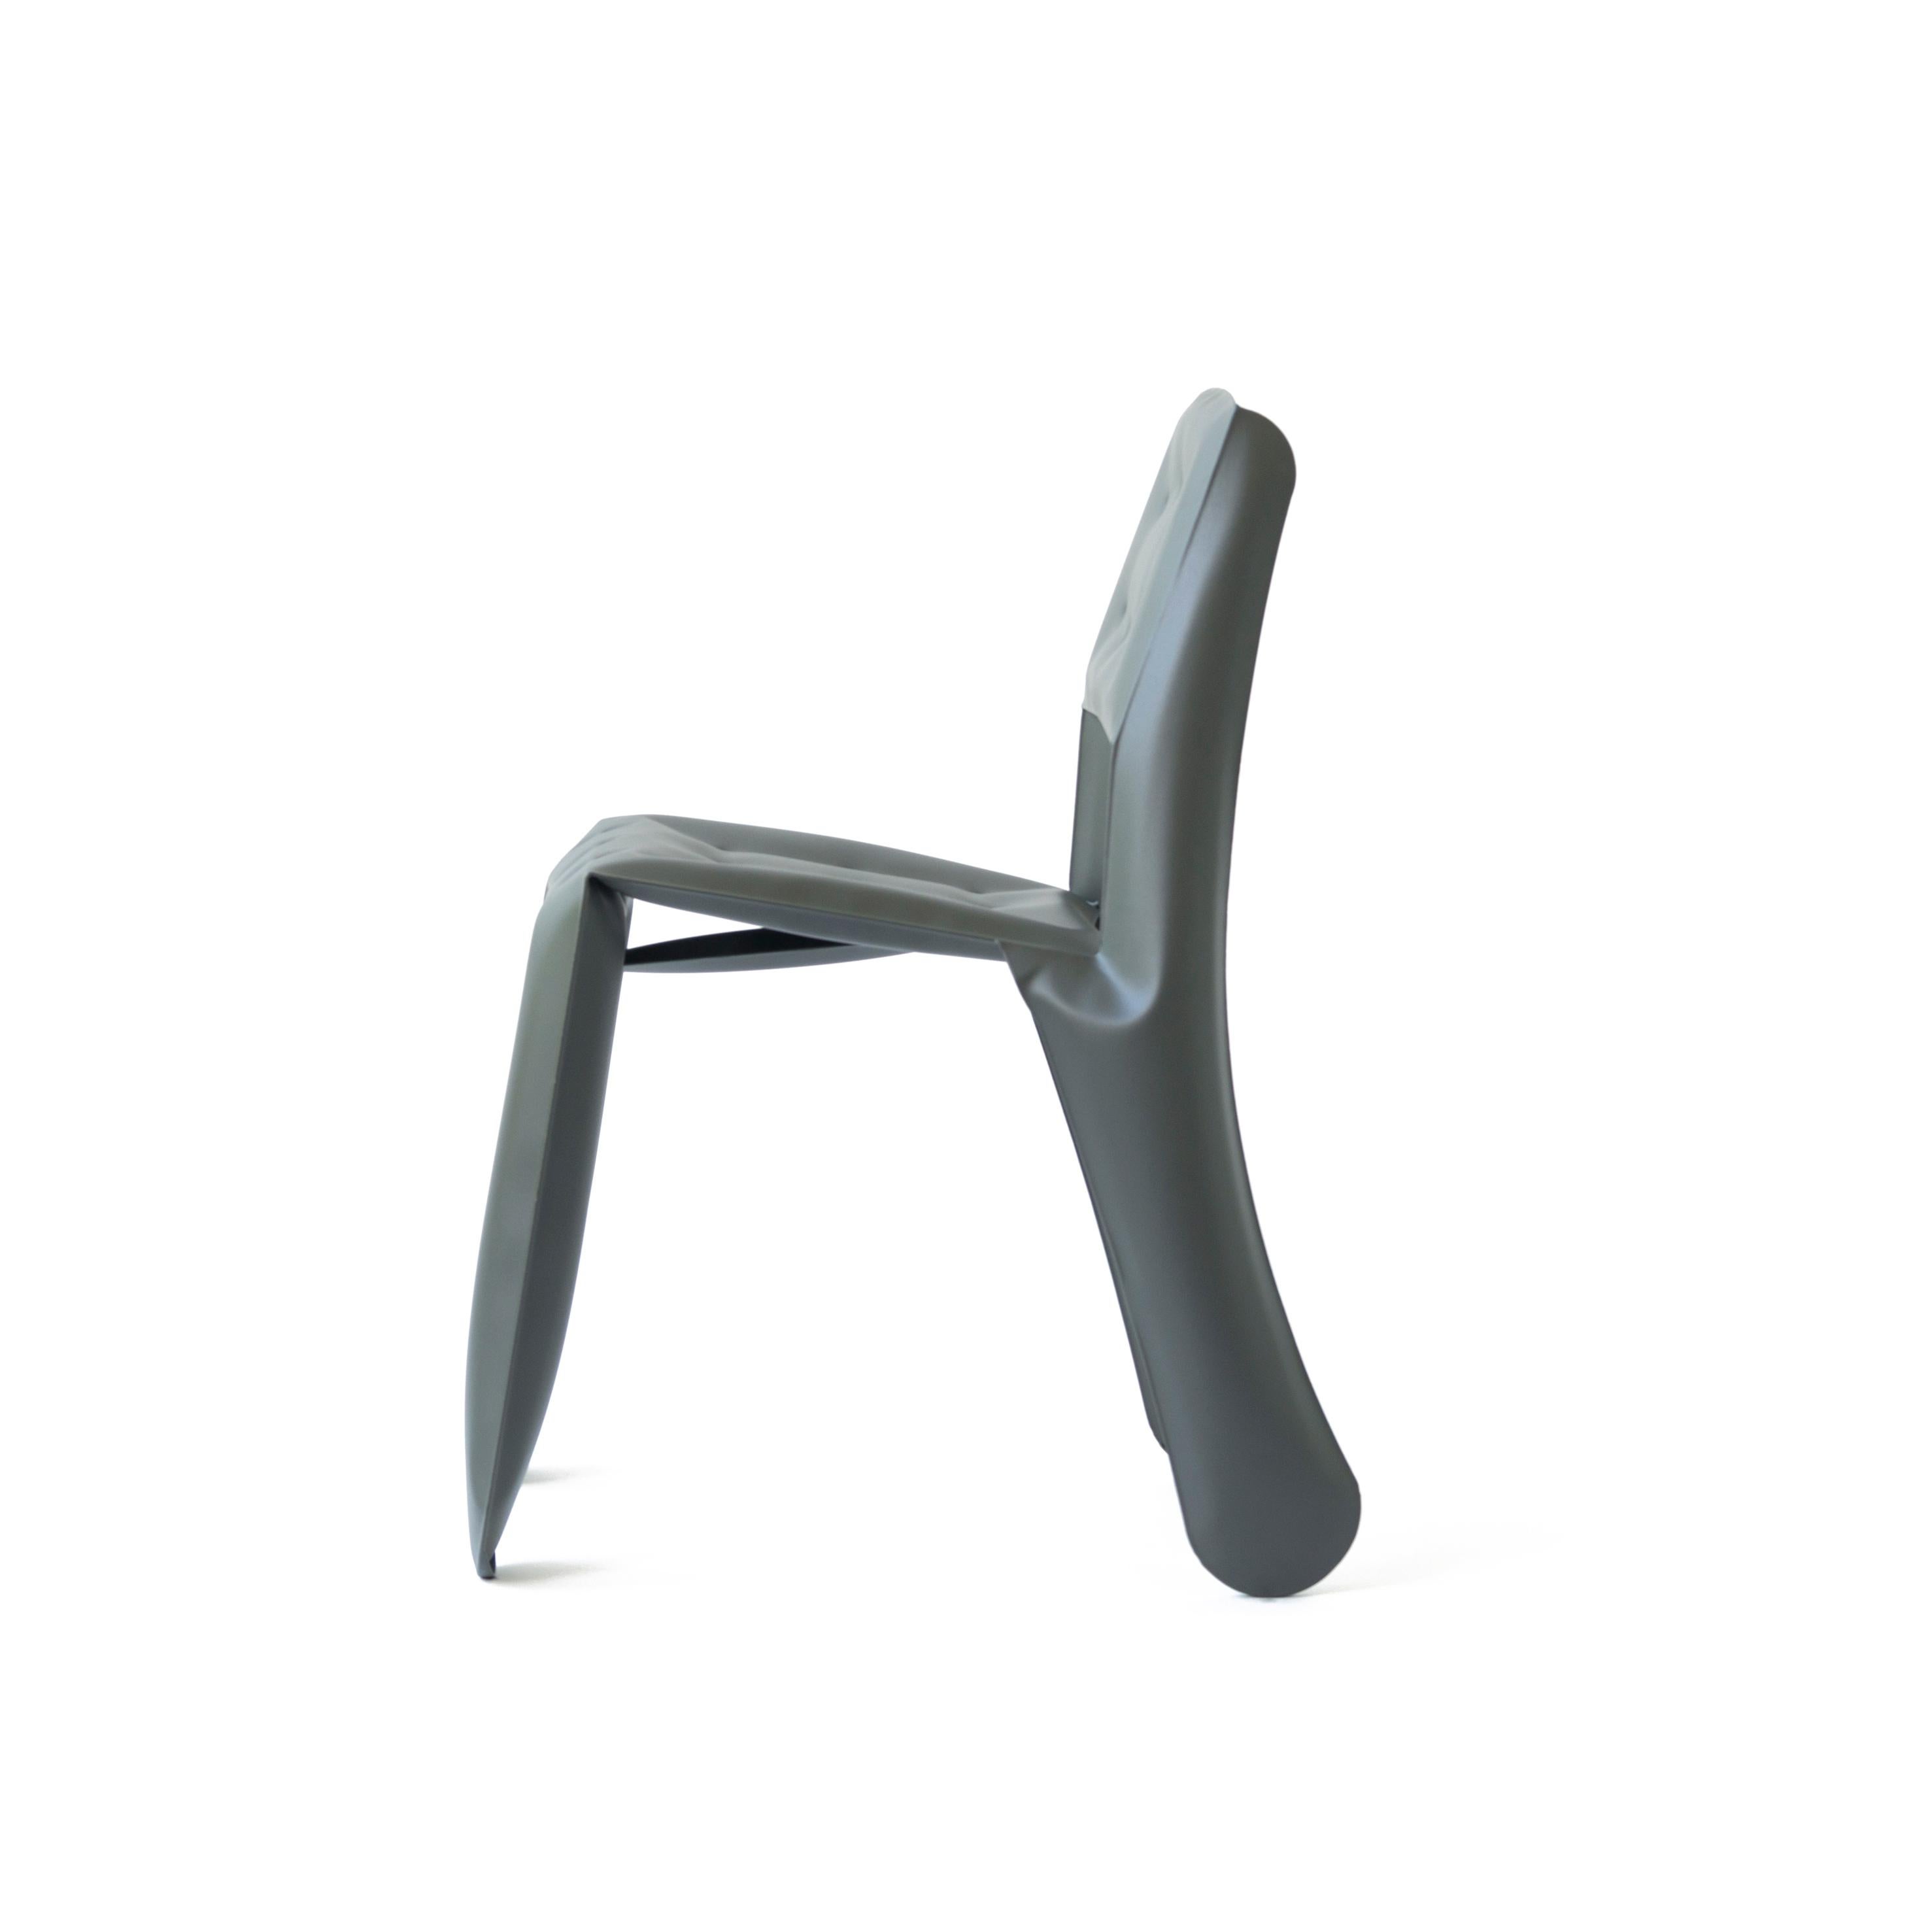 Organic Modern Umbra Grey Aluminum Chippensteel 0.5 Sculptural Chair by Zieta For Sale